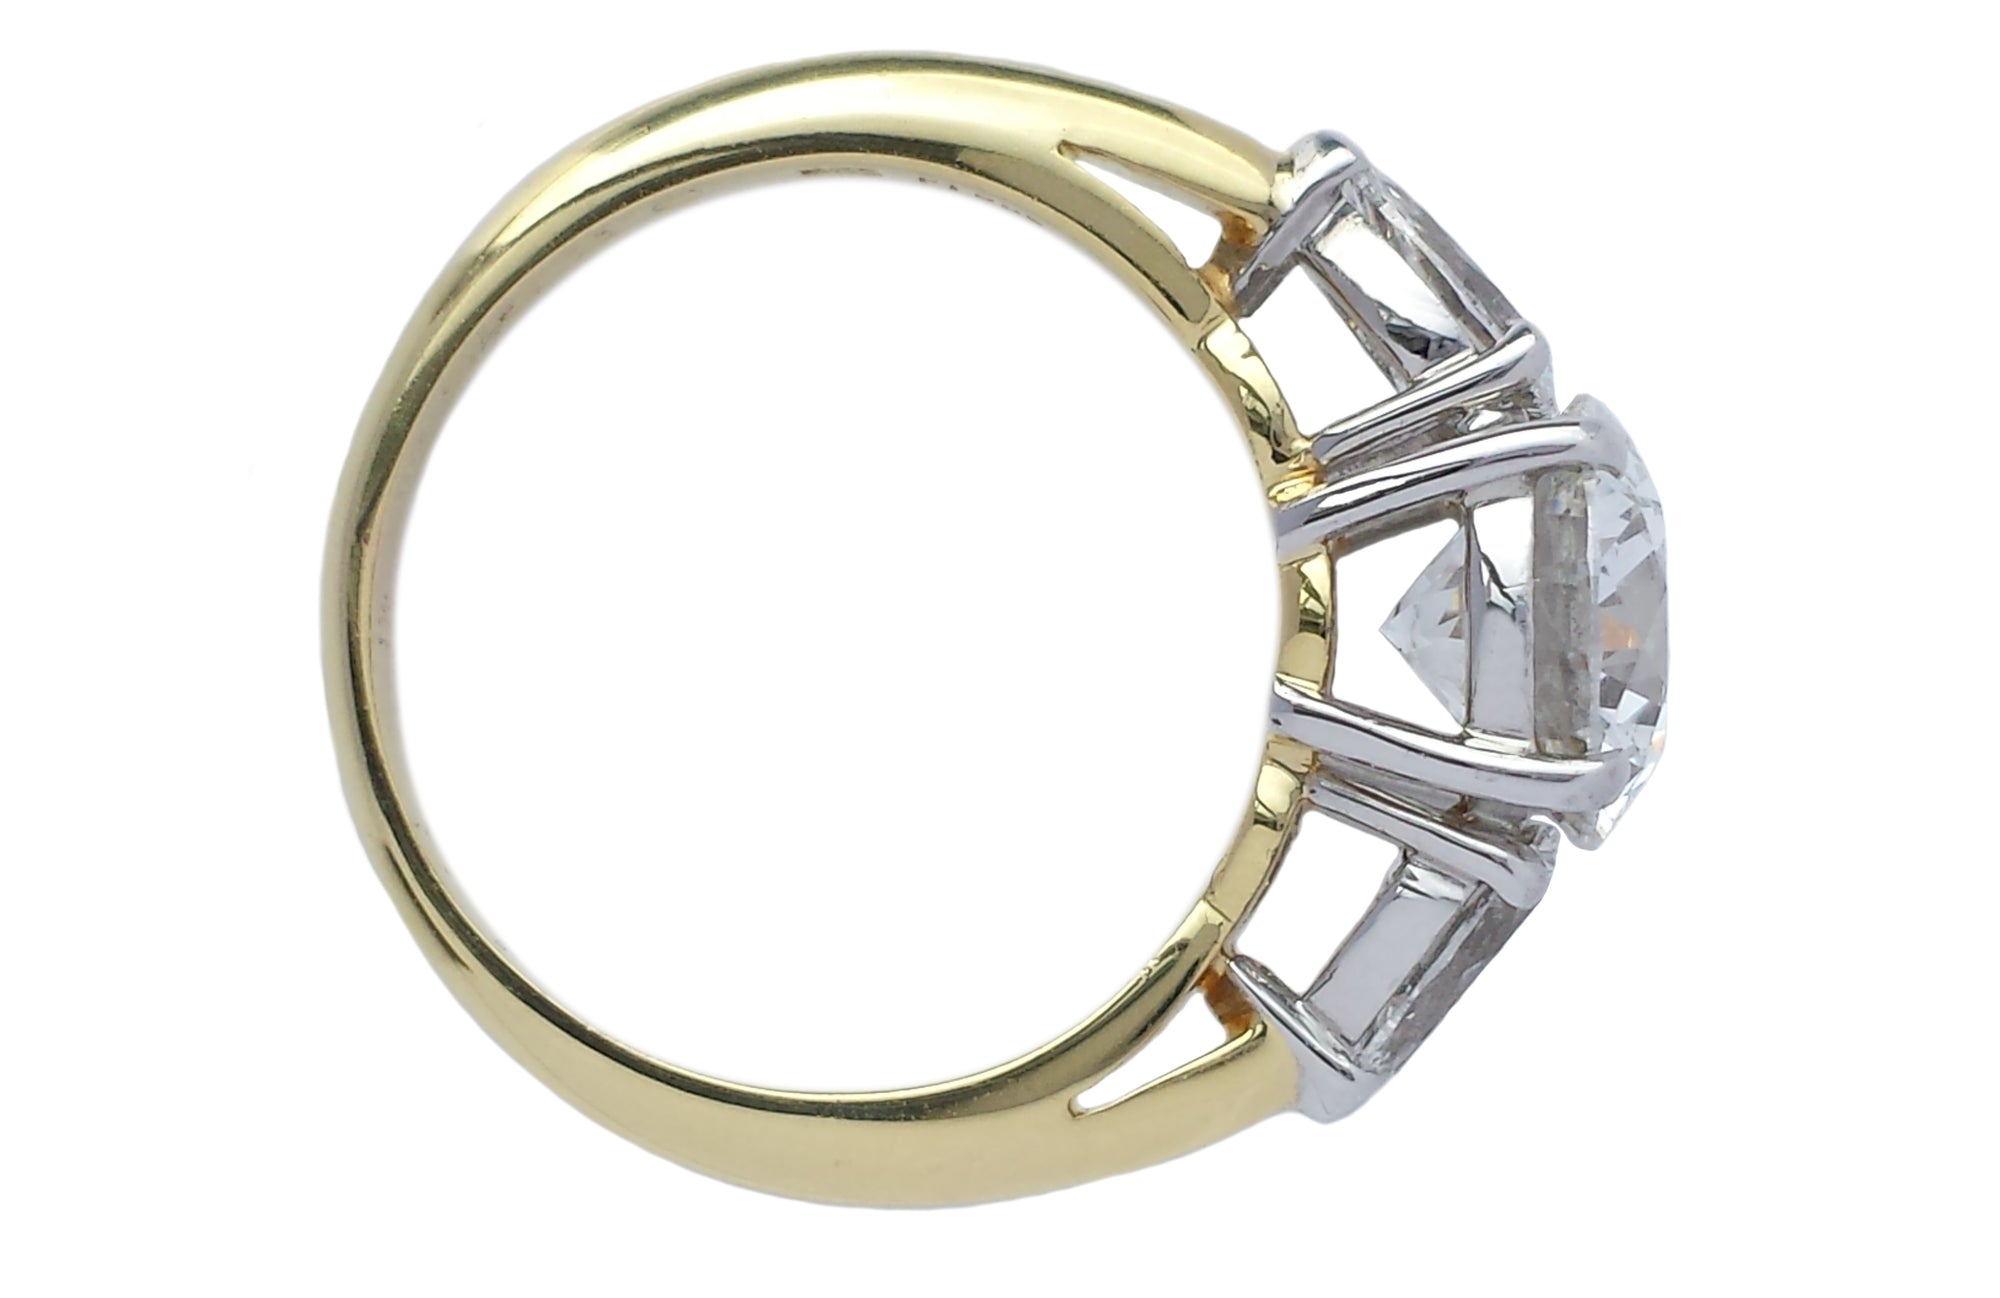 Tiffany & Co. 2.75tcw F/VS1 Three Stone Diamond Engagement Ring with Pear-shaped side stones